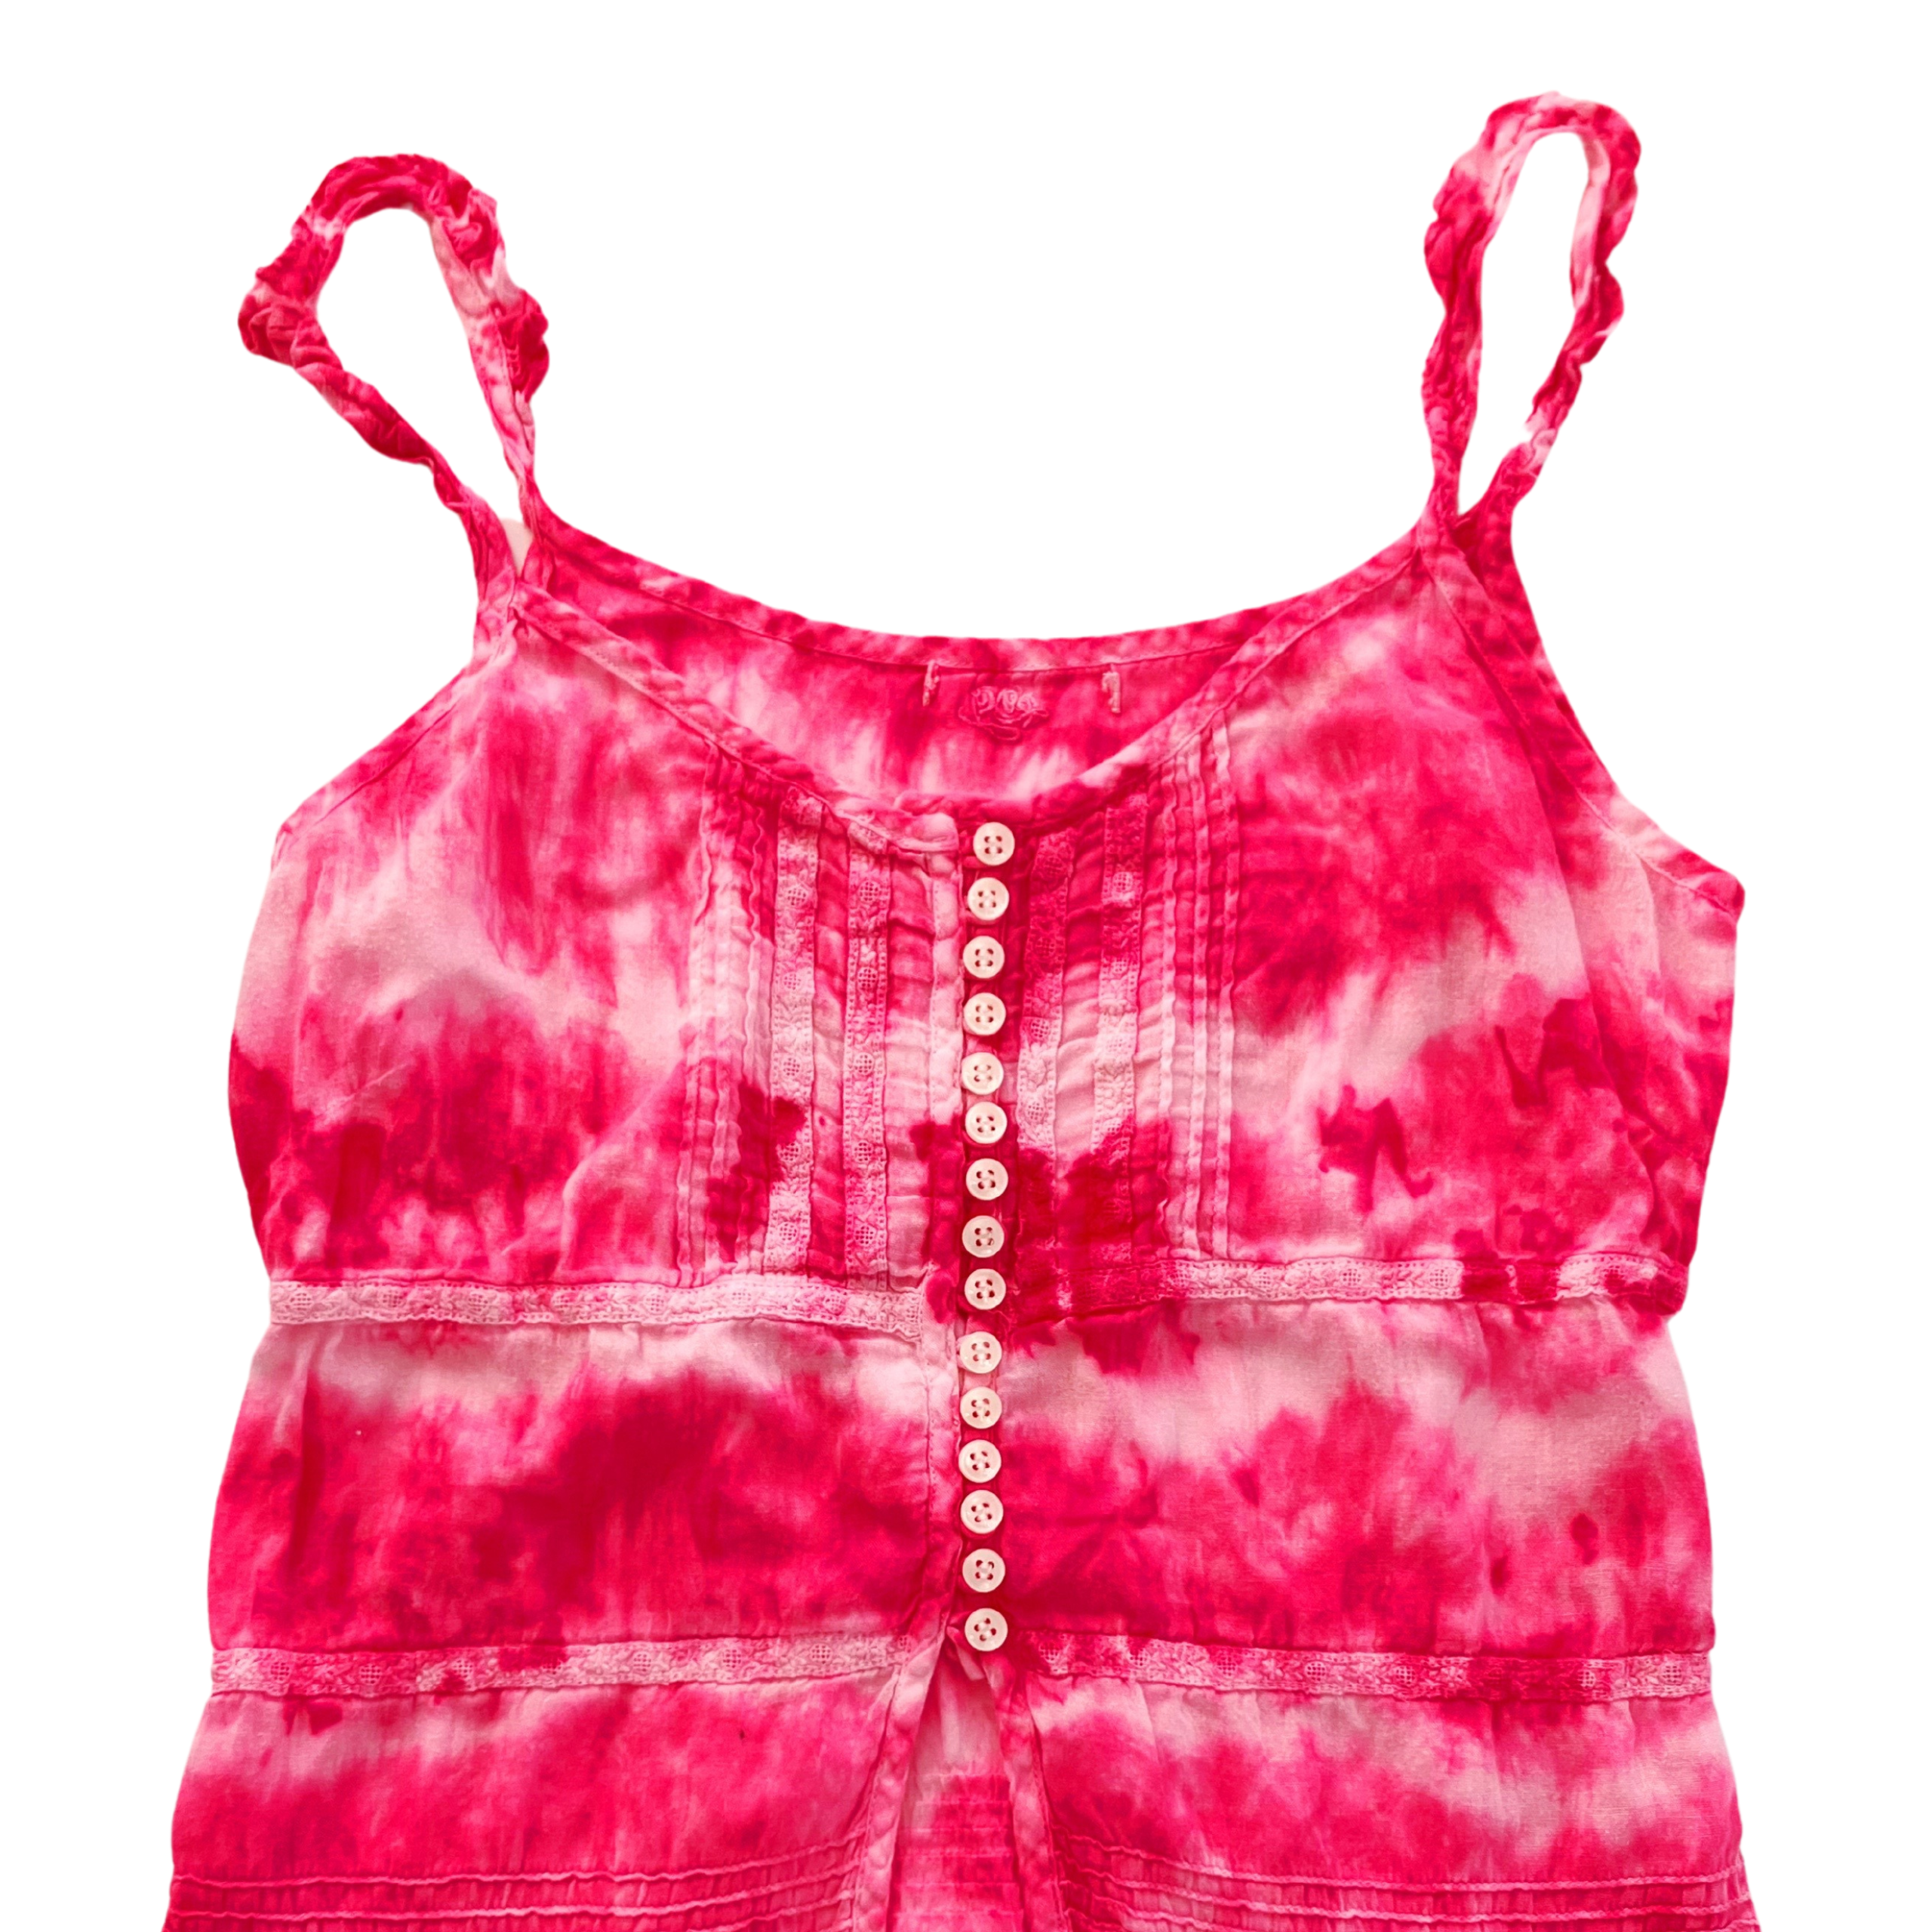 Shibori Pink Tie-Dye Crop Top with Ruffle Spaghetti Straps, Women's, Teen